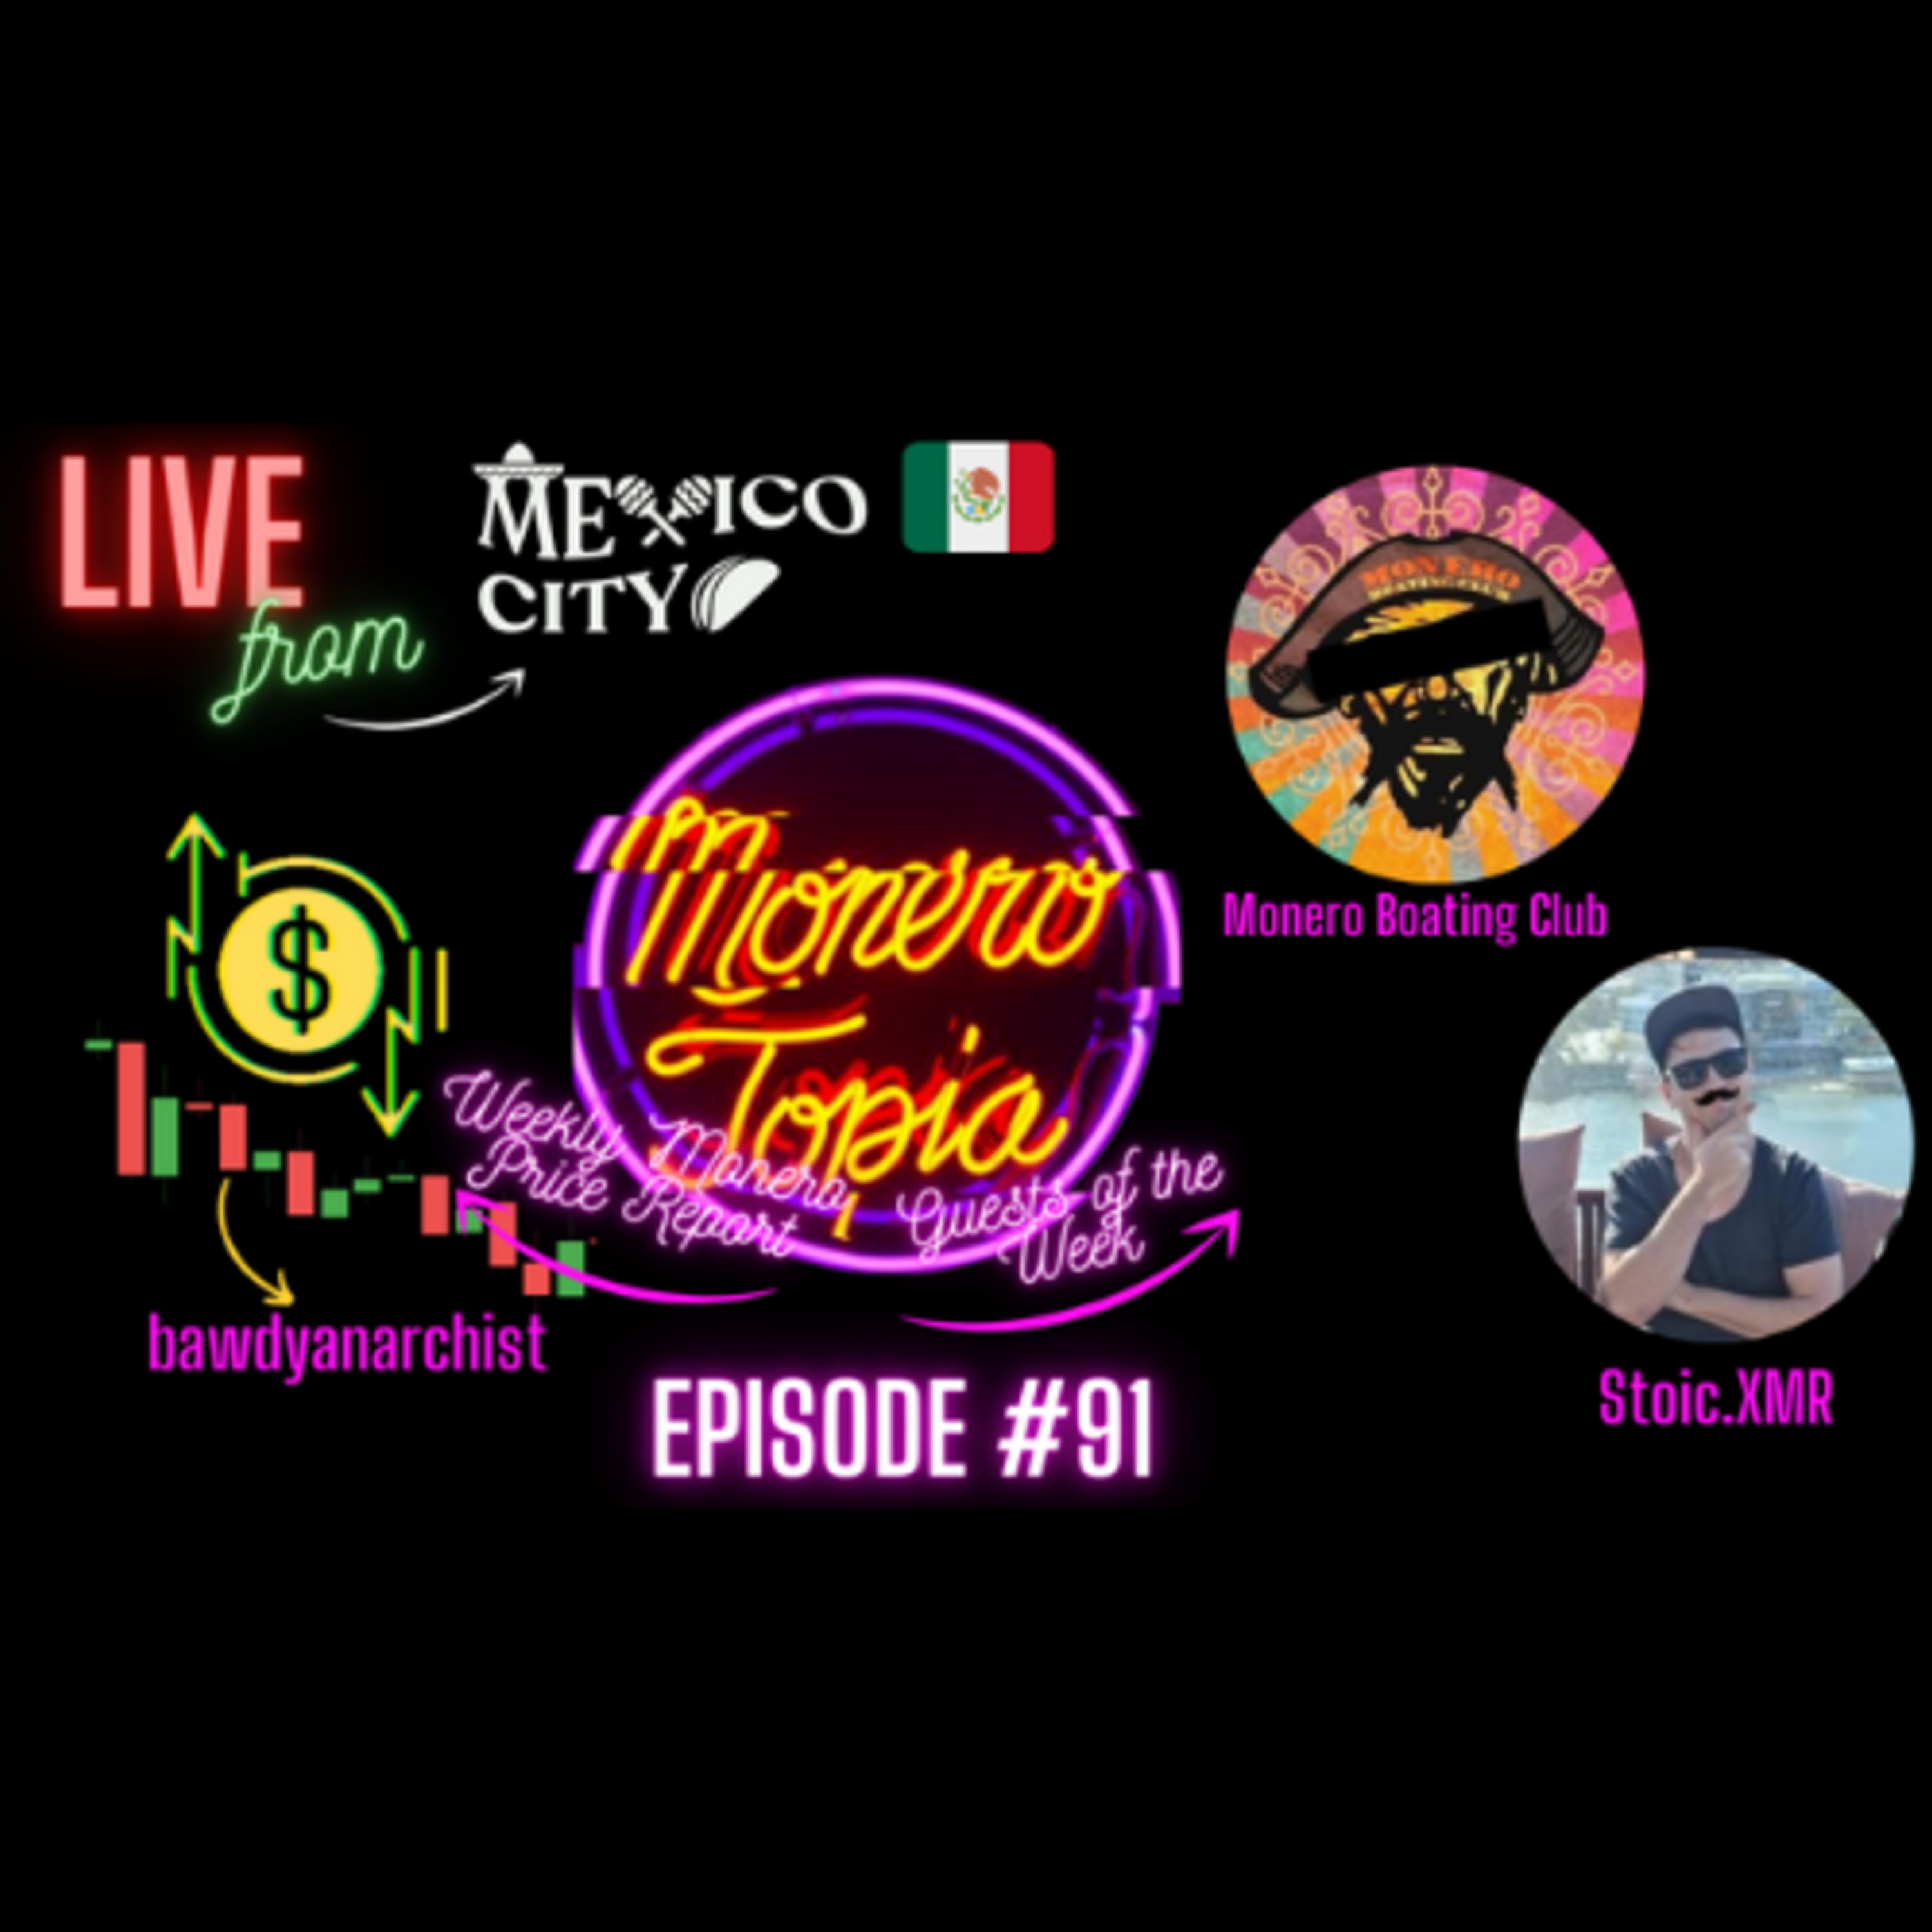 LIVE from Mexico City! MoneroBoatingClub,Stoic, Monerotopia23, Price Report Bawdyanarchist! EPI #91